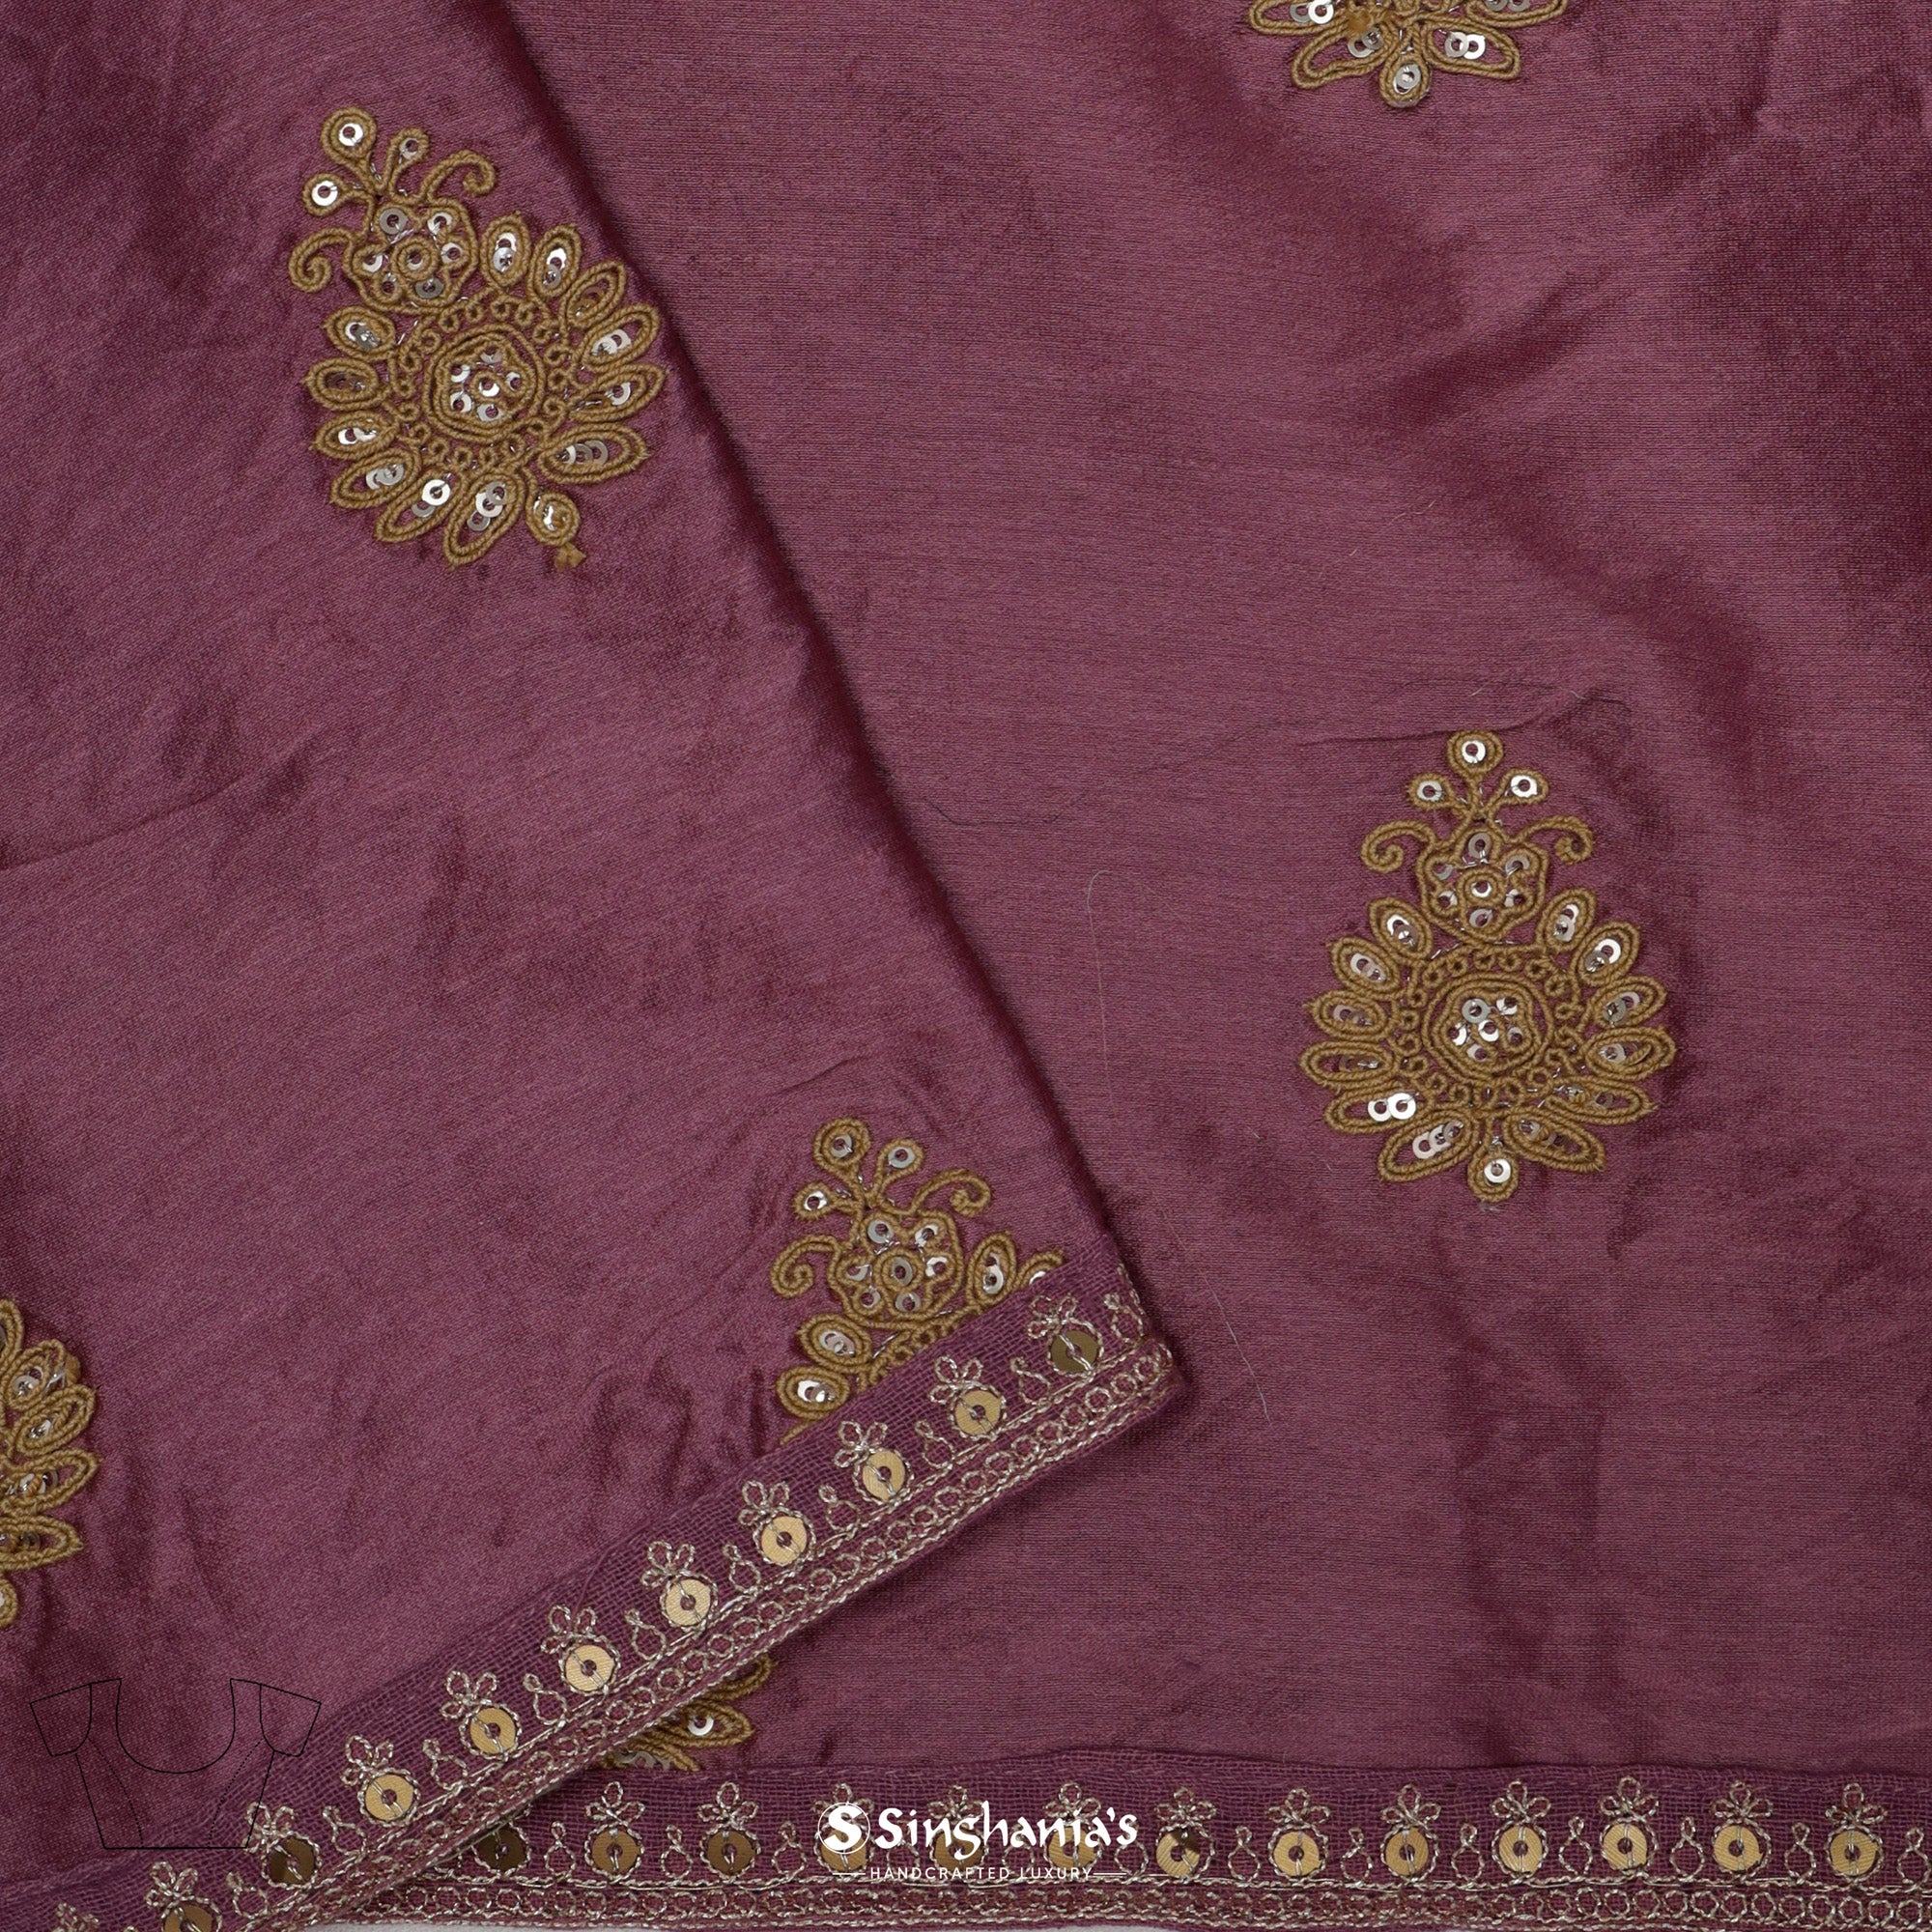 Old Rose Pink Printed Bandhani Organza Saree With Paisley-Butti Pattern